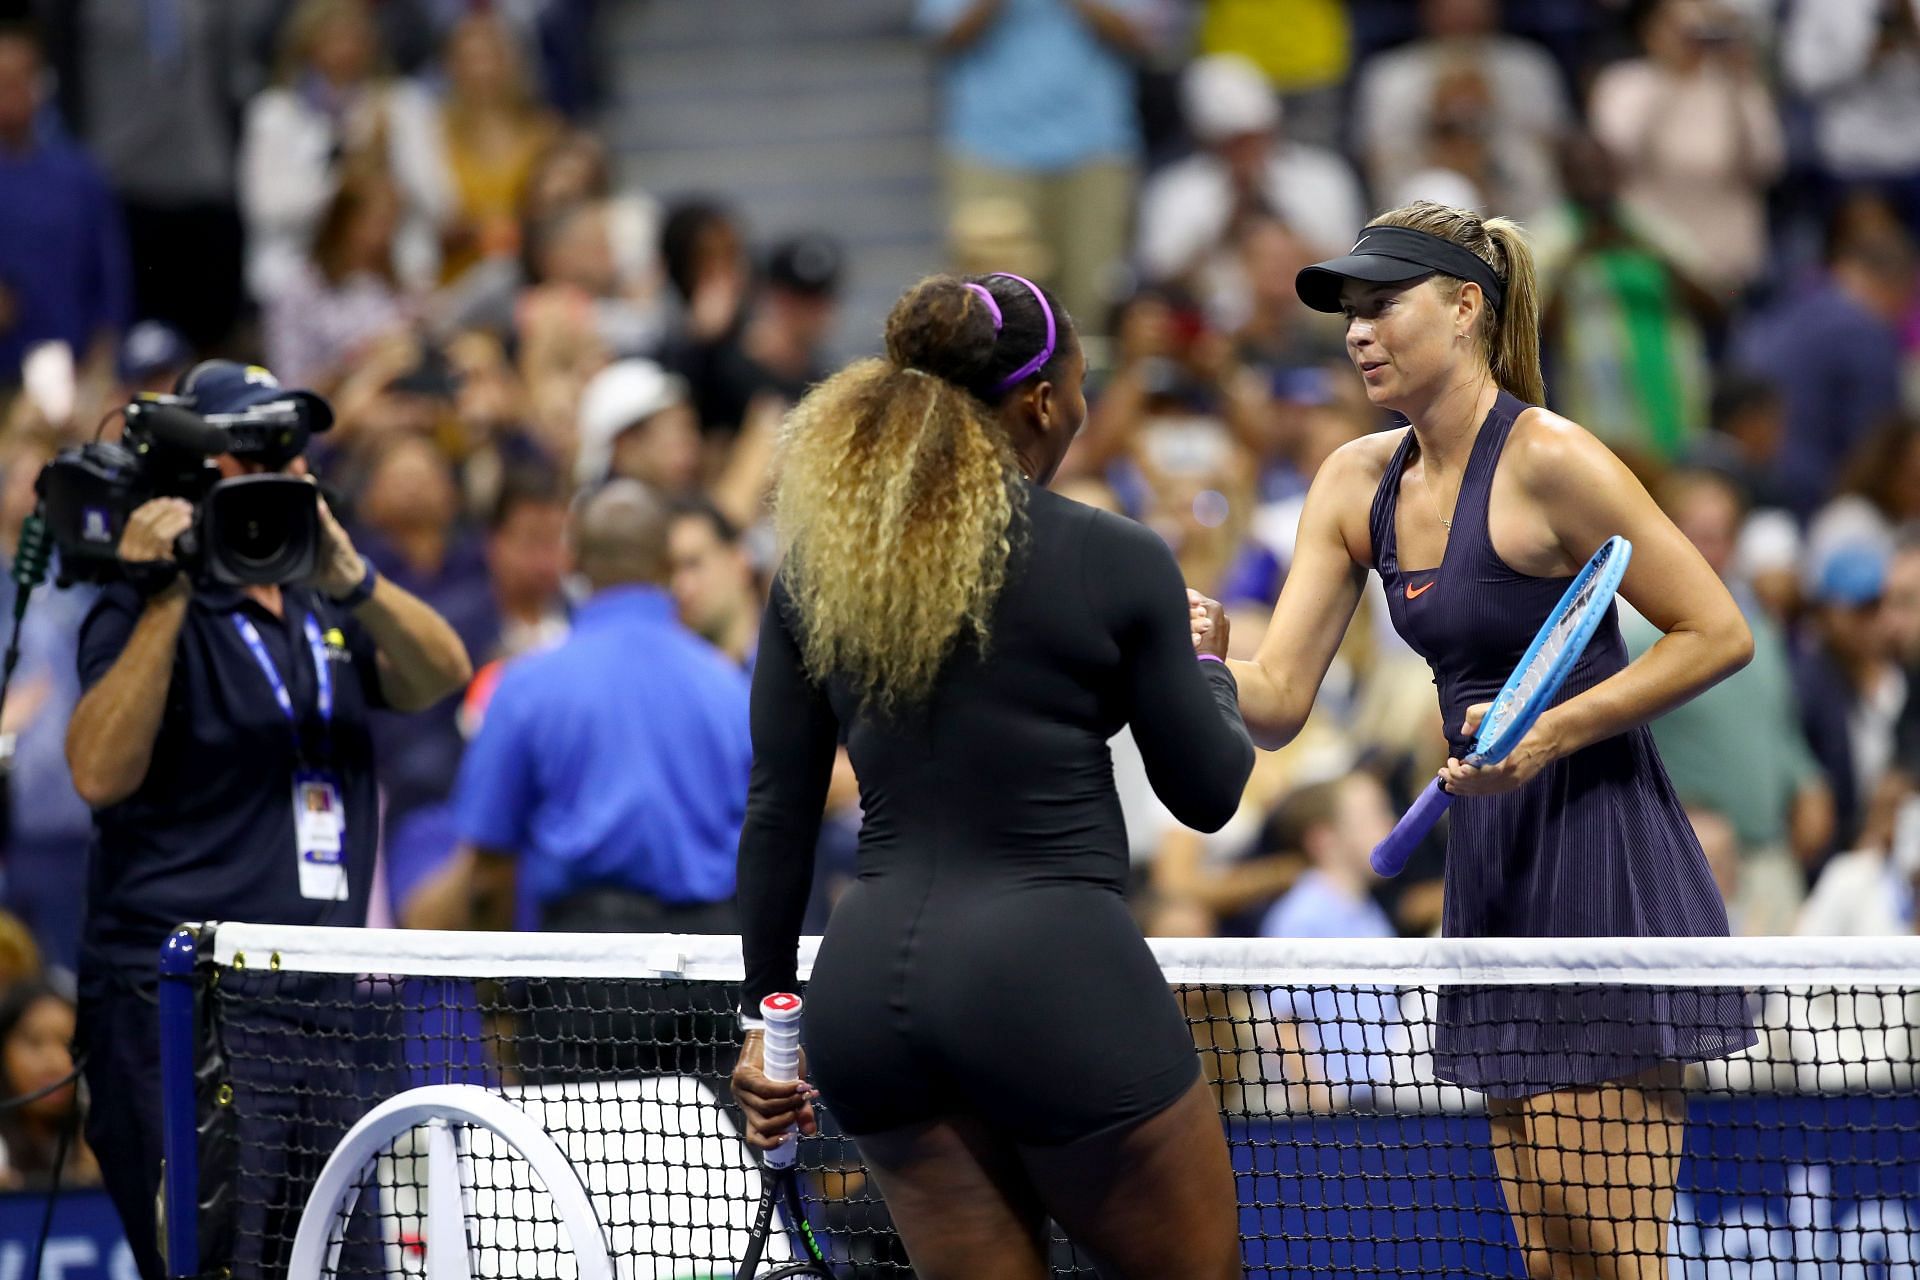 Serena Williams after beating Maria Sharapova at the 2019 US Open